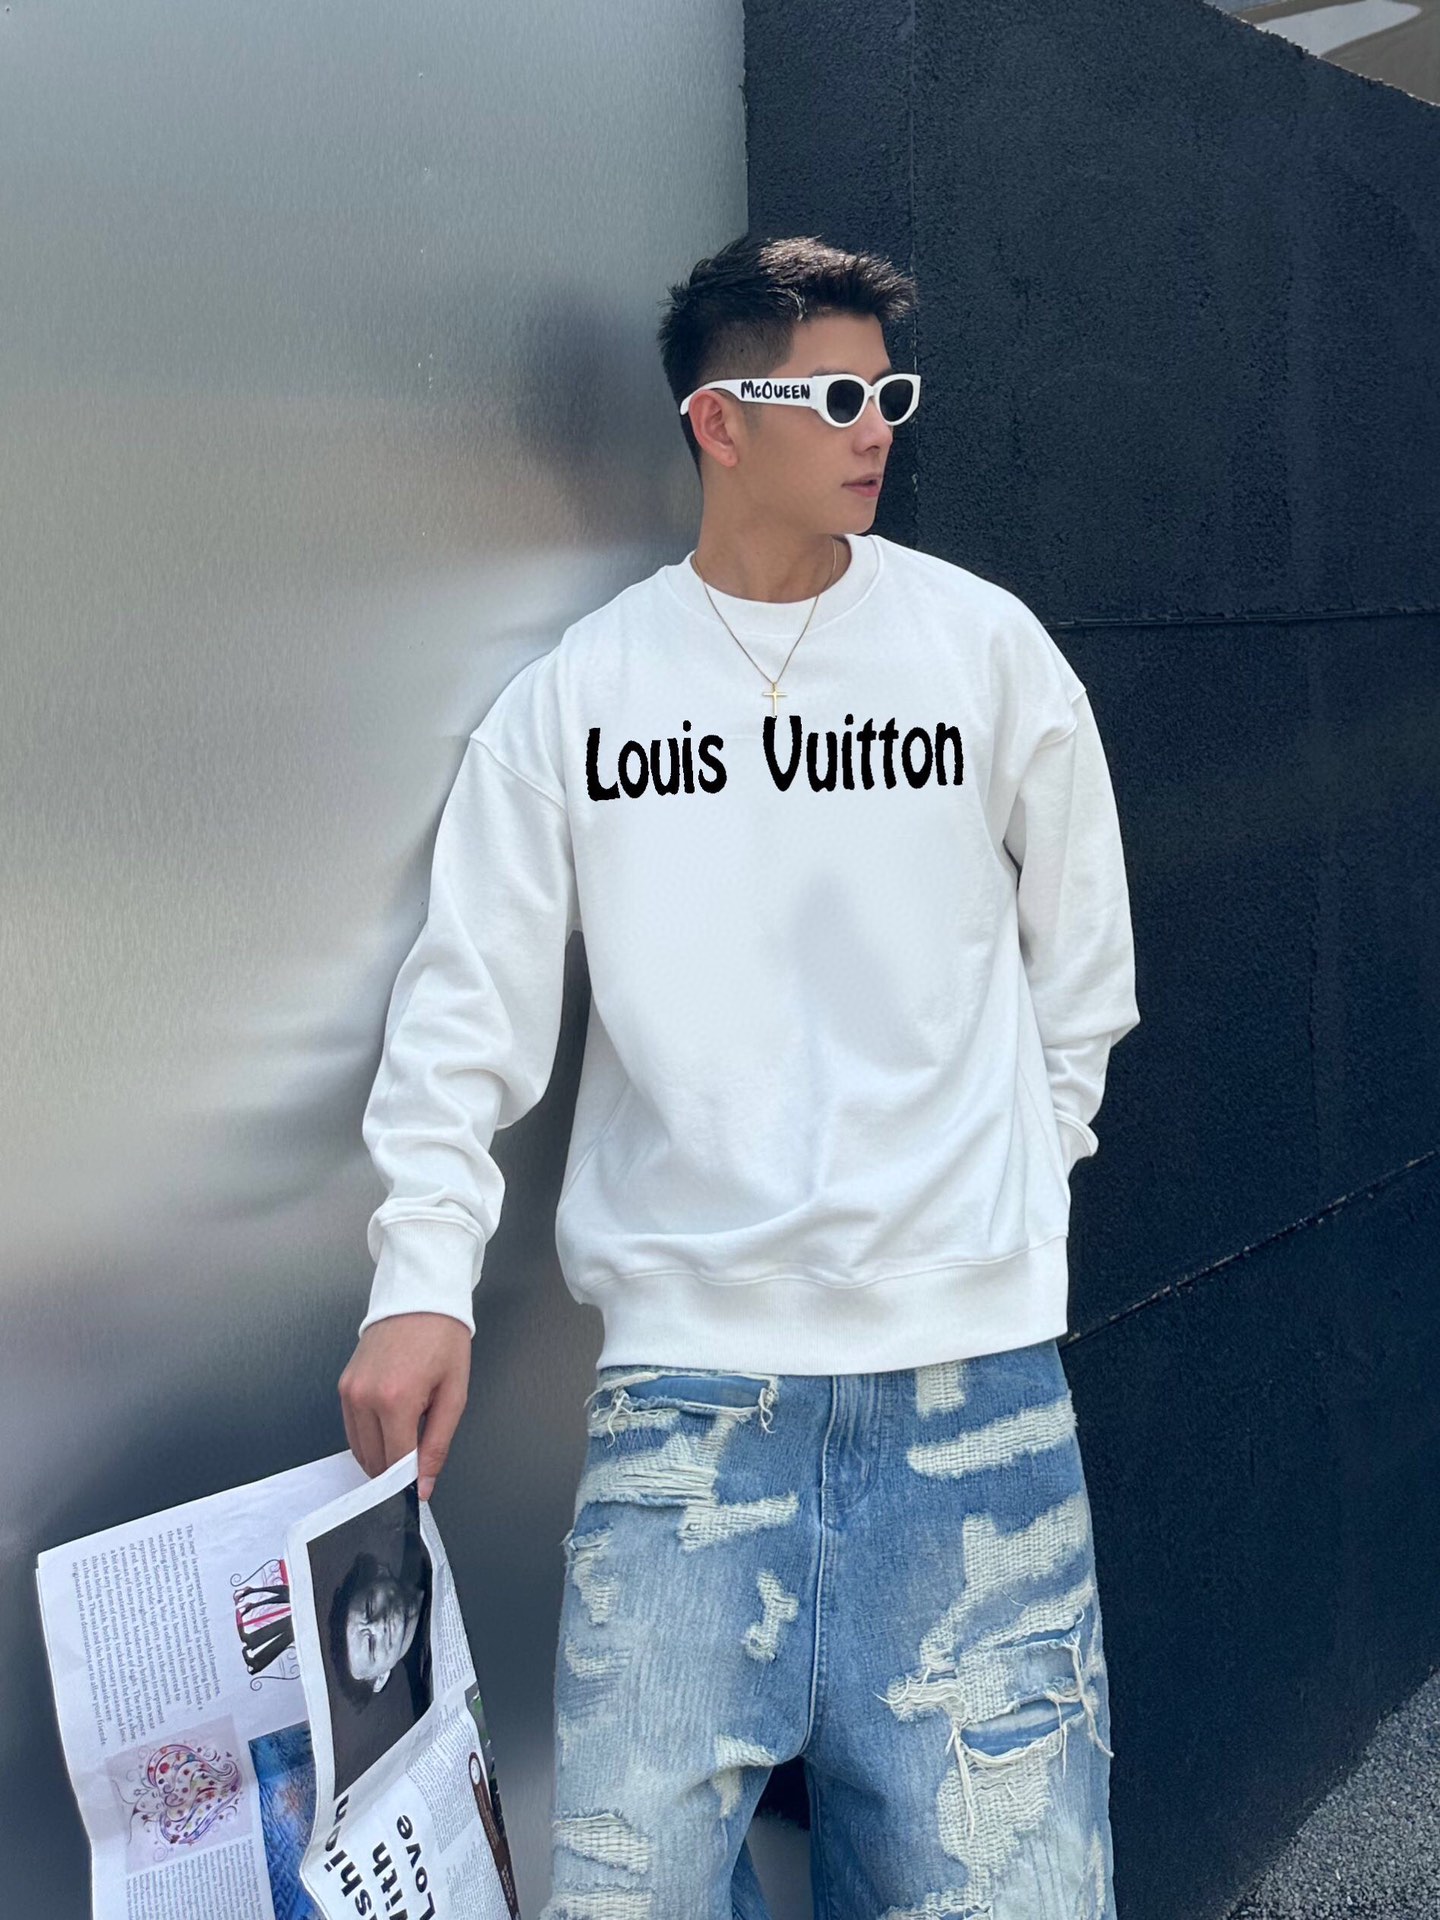 Louis Vuitton Clothing Sweatshirts Black White Printing Unisex Fall/Winter Collection Trendy Brand